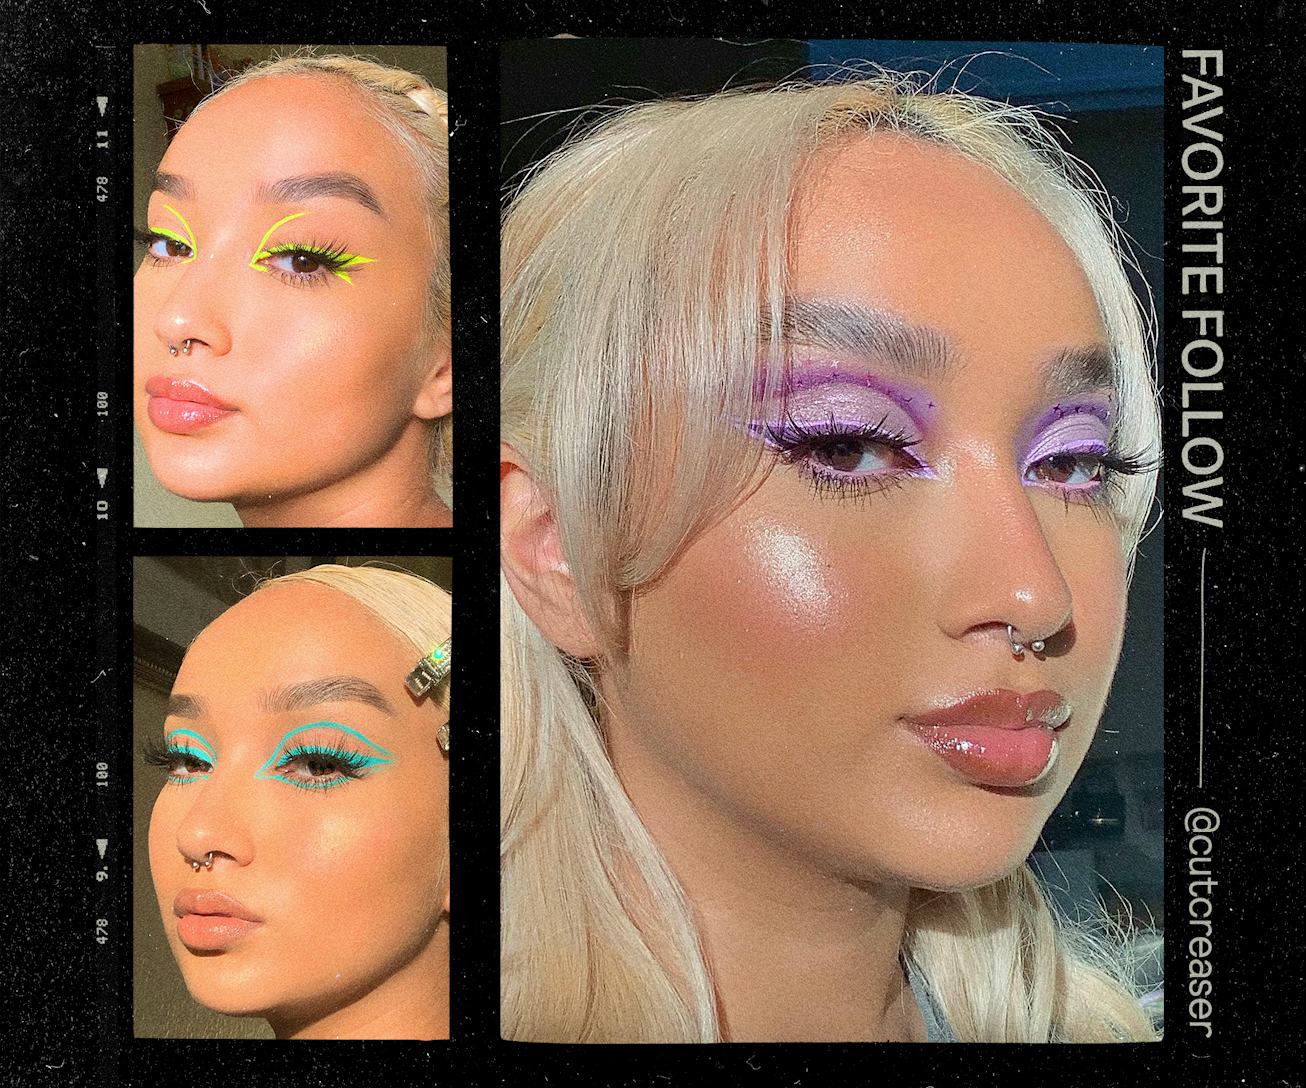 Instagram user Cutcreaser poses for multiple selfies in makeup